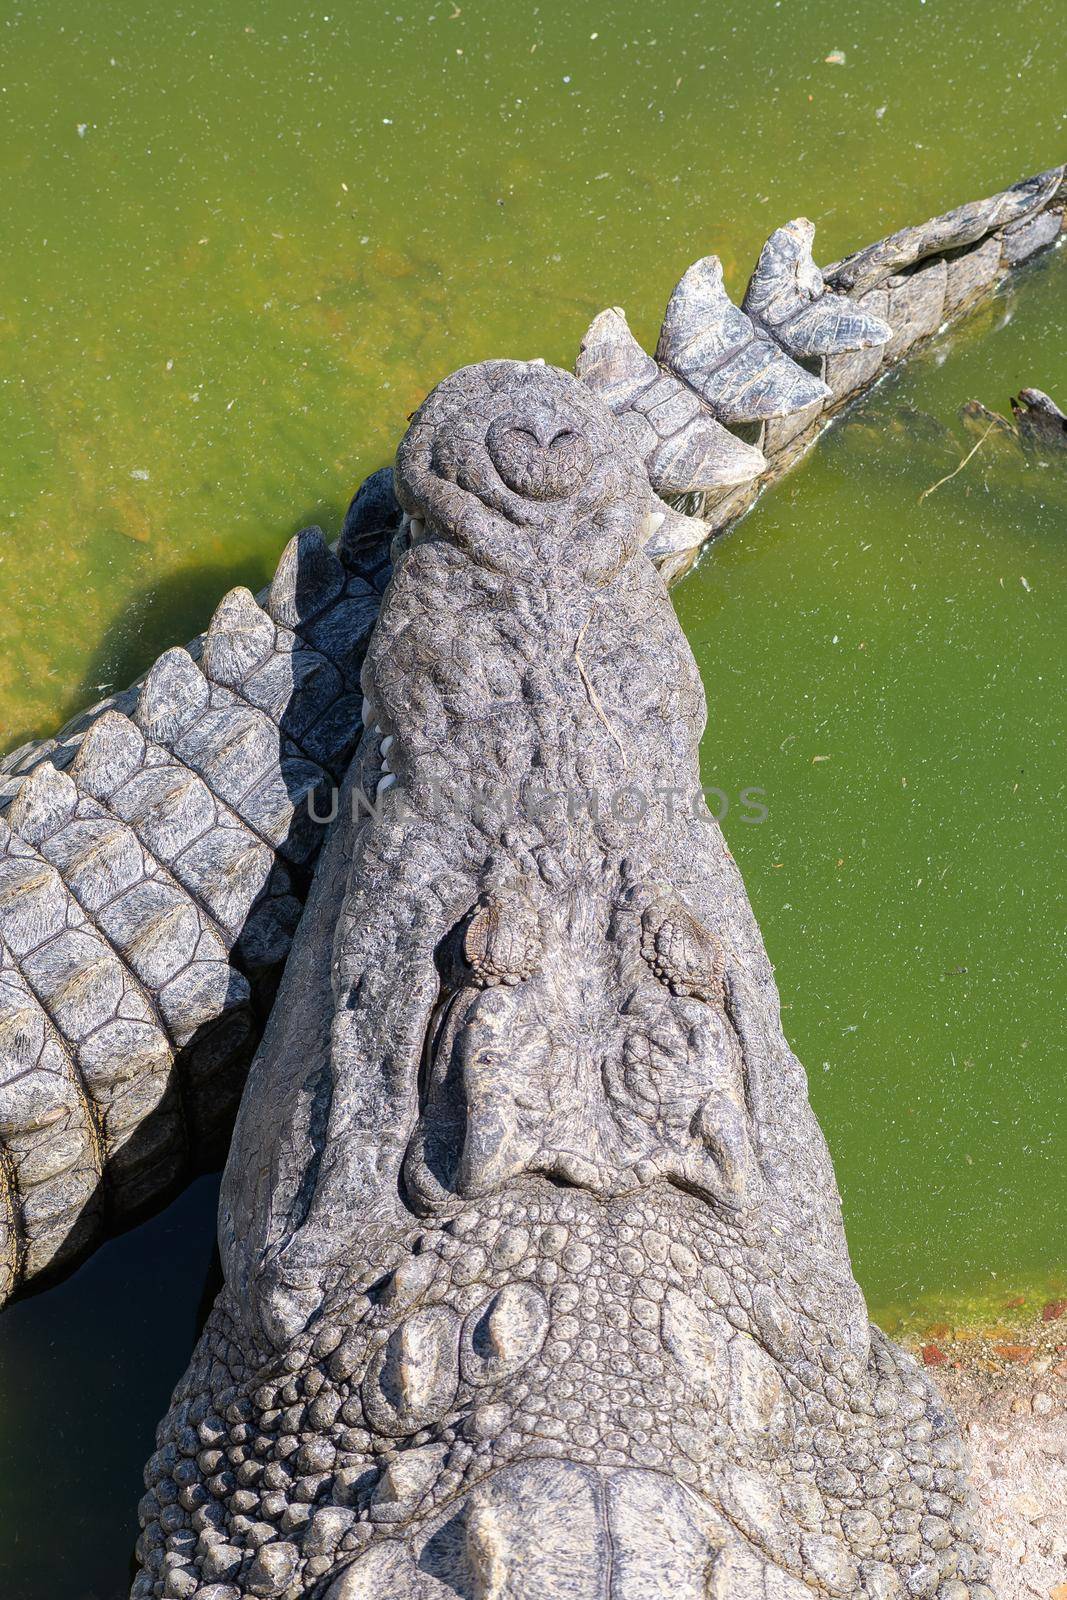 The face and tail of a nile crocodile, Crocodylus niloticus